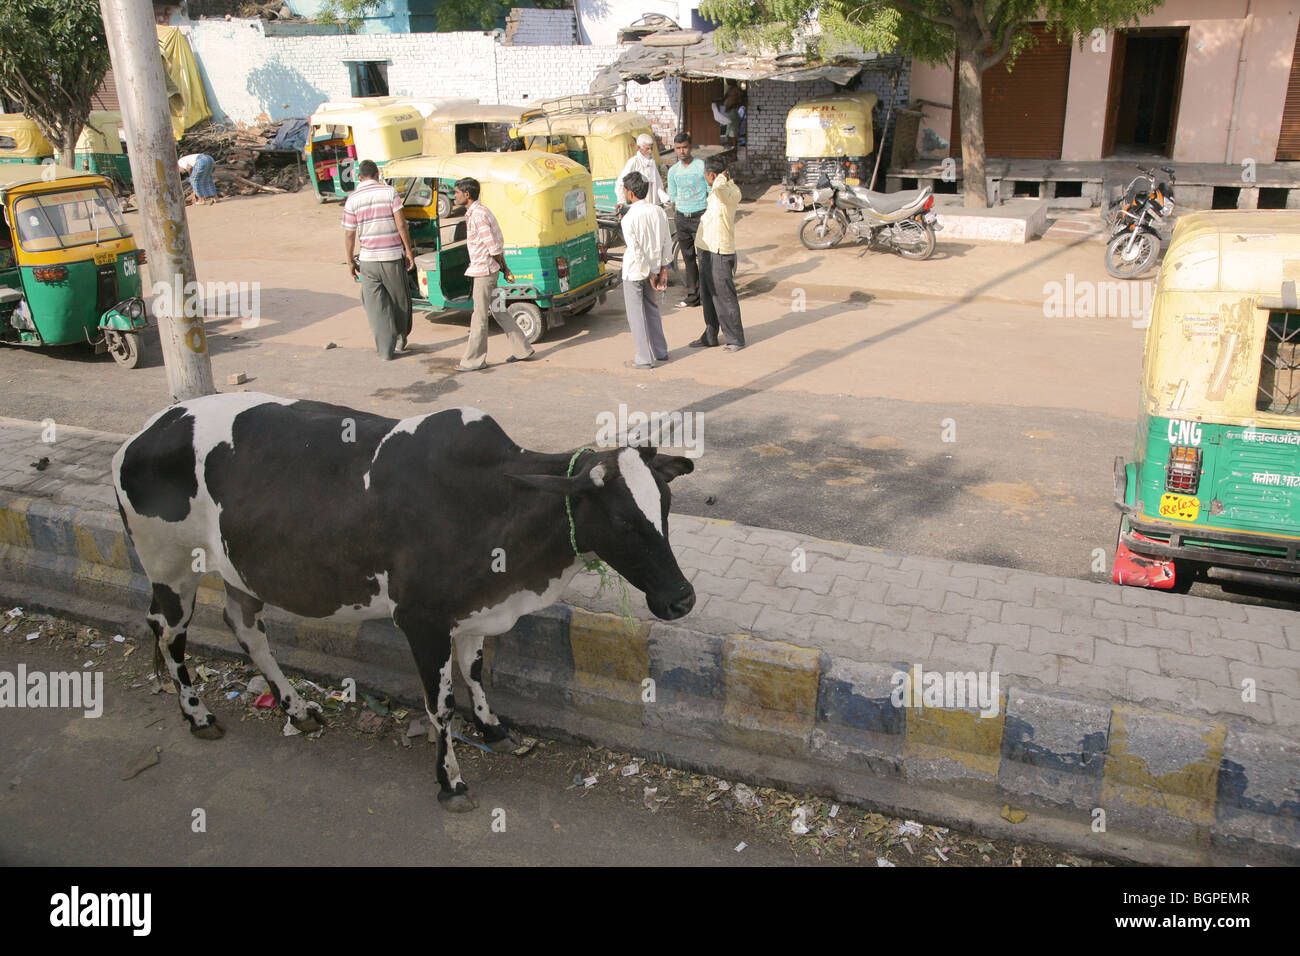 Sacred cow and tuktuks, Jaipur India. Stock Photo